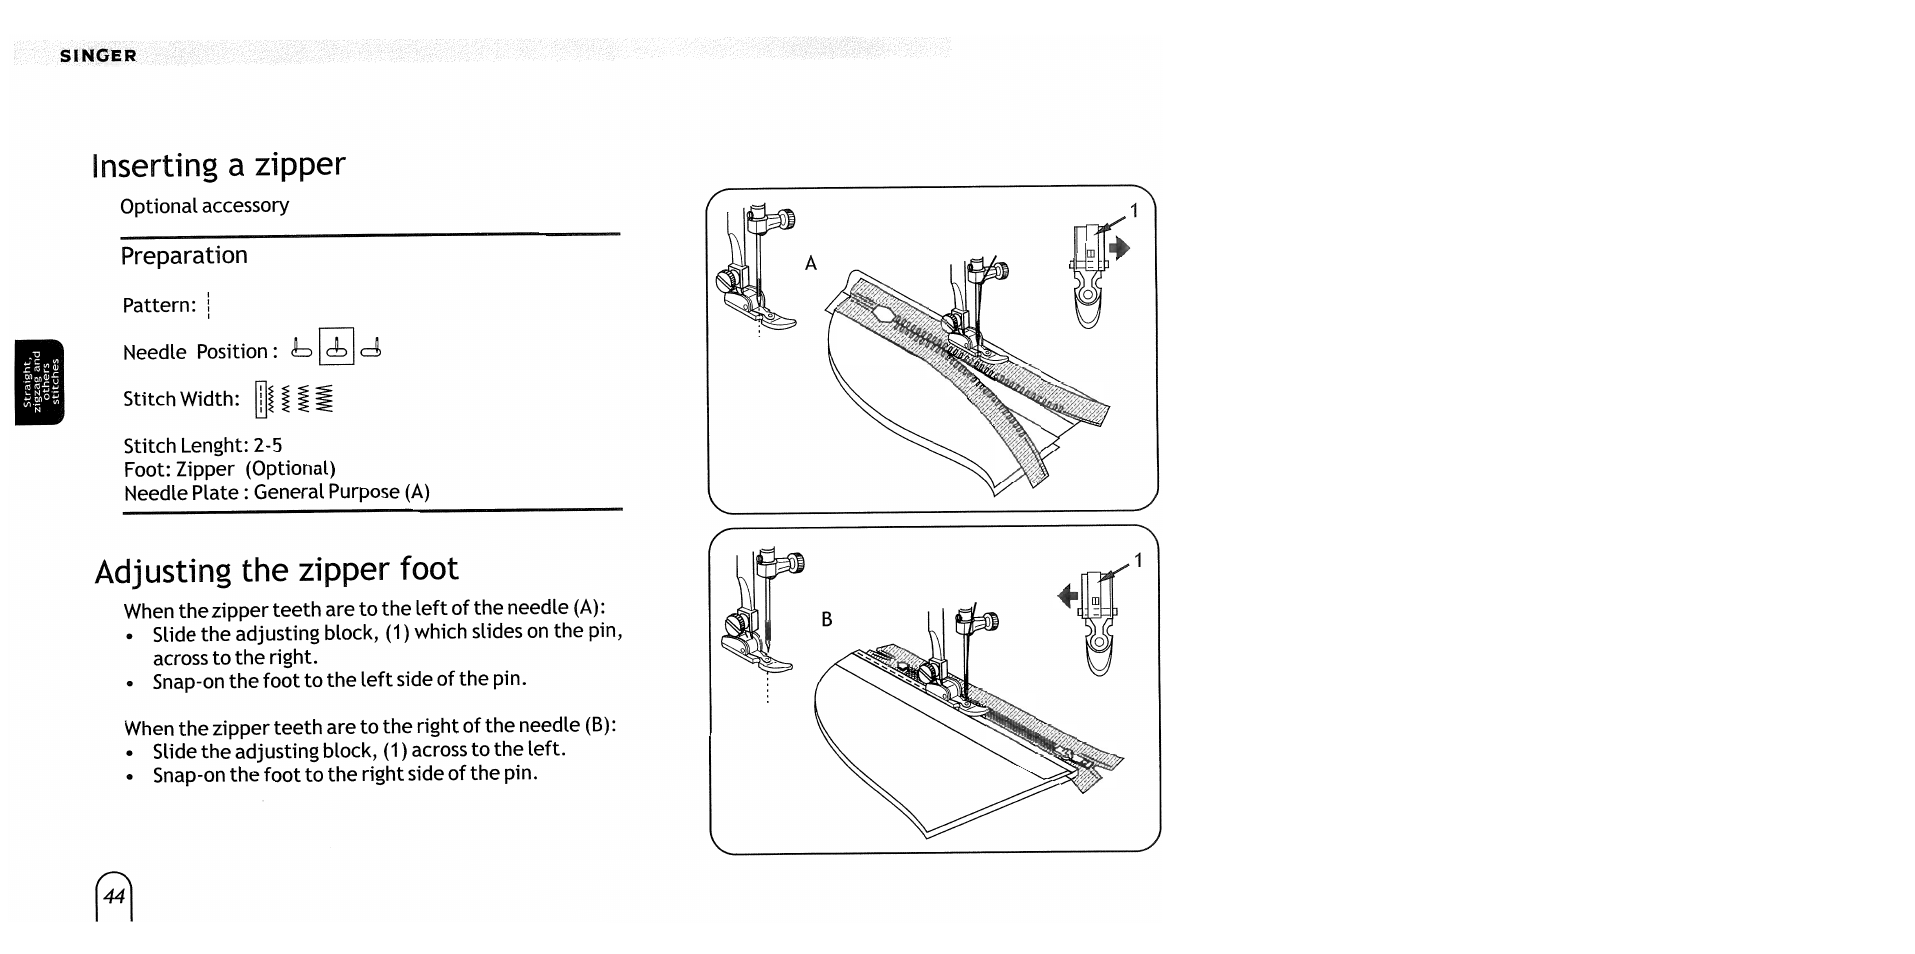 Inserting a zipper, Preparation, Adjusting the zipper foot | Singer | SINGER 2517 Merritt User Manual | Page 47 / 80